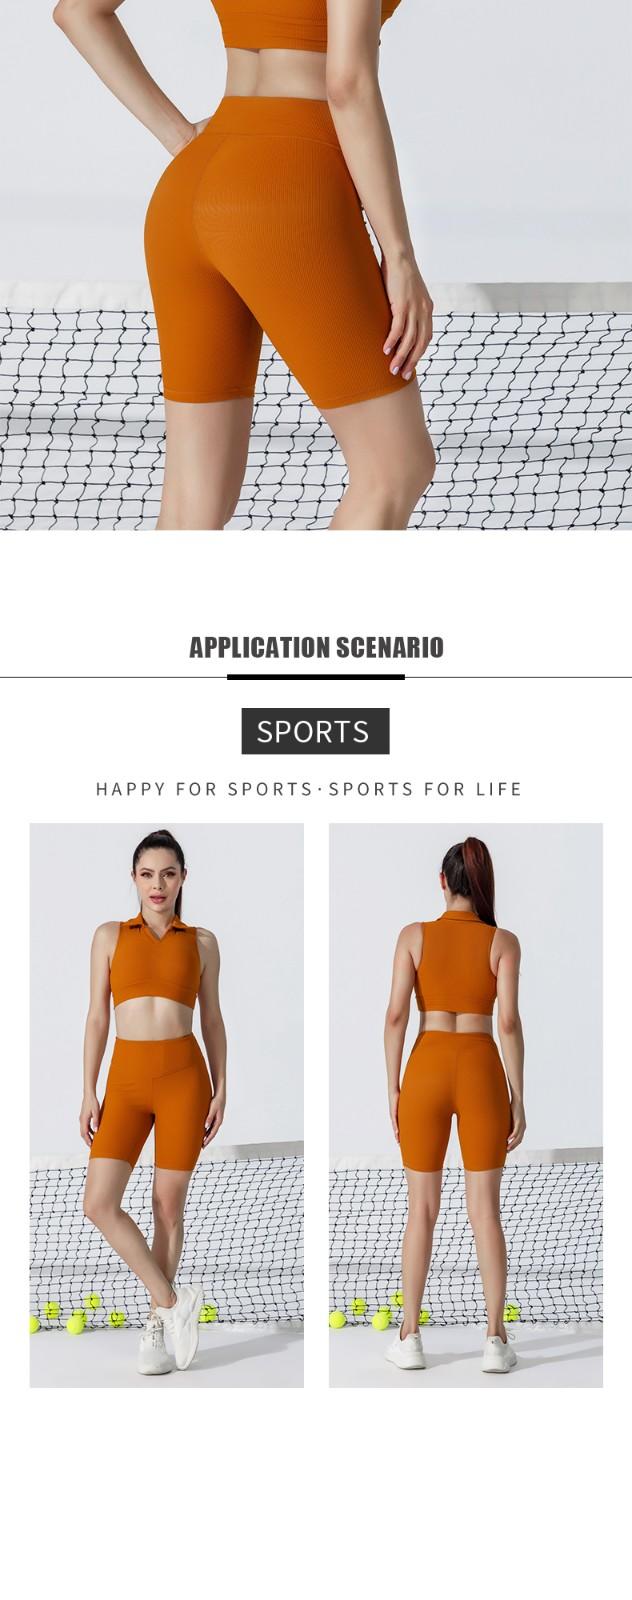 custom tennis wear ladies supplier for yoga